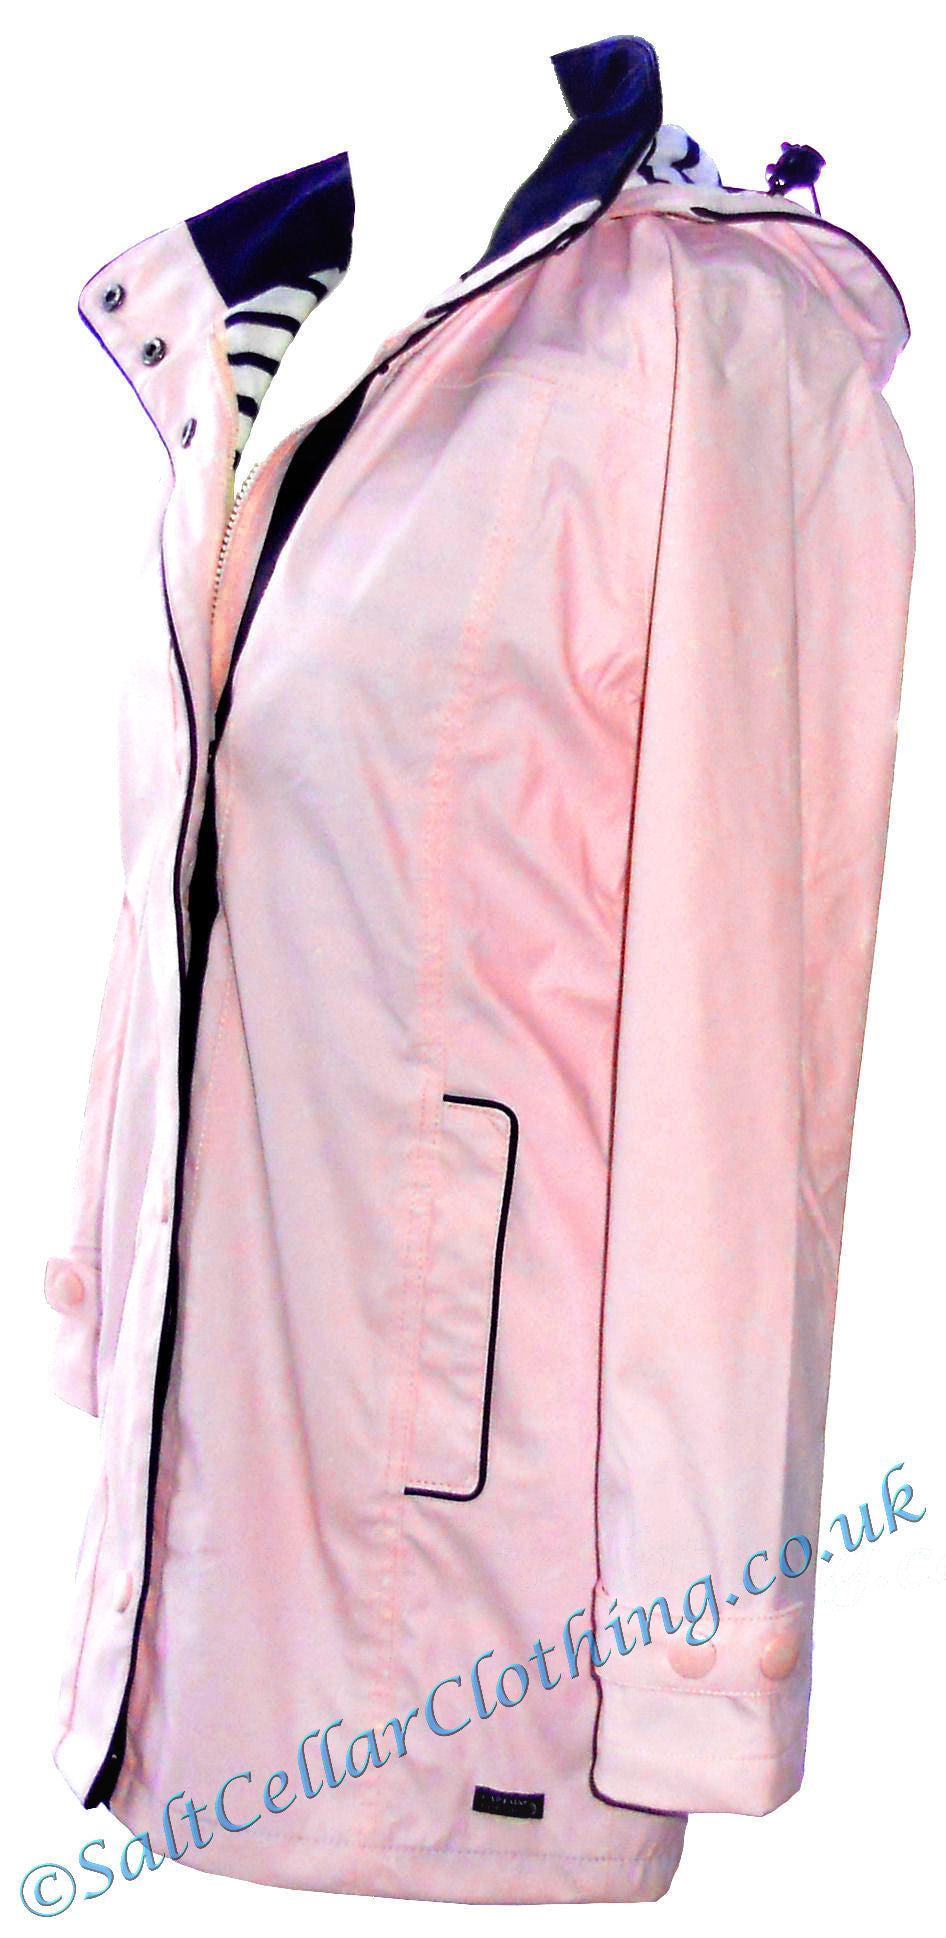 Pale Pink waterproof women's Regate Ete rain jacket from Captain Corsaire.